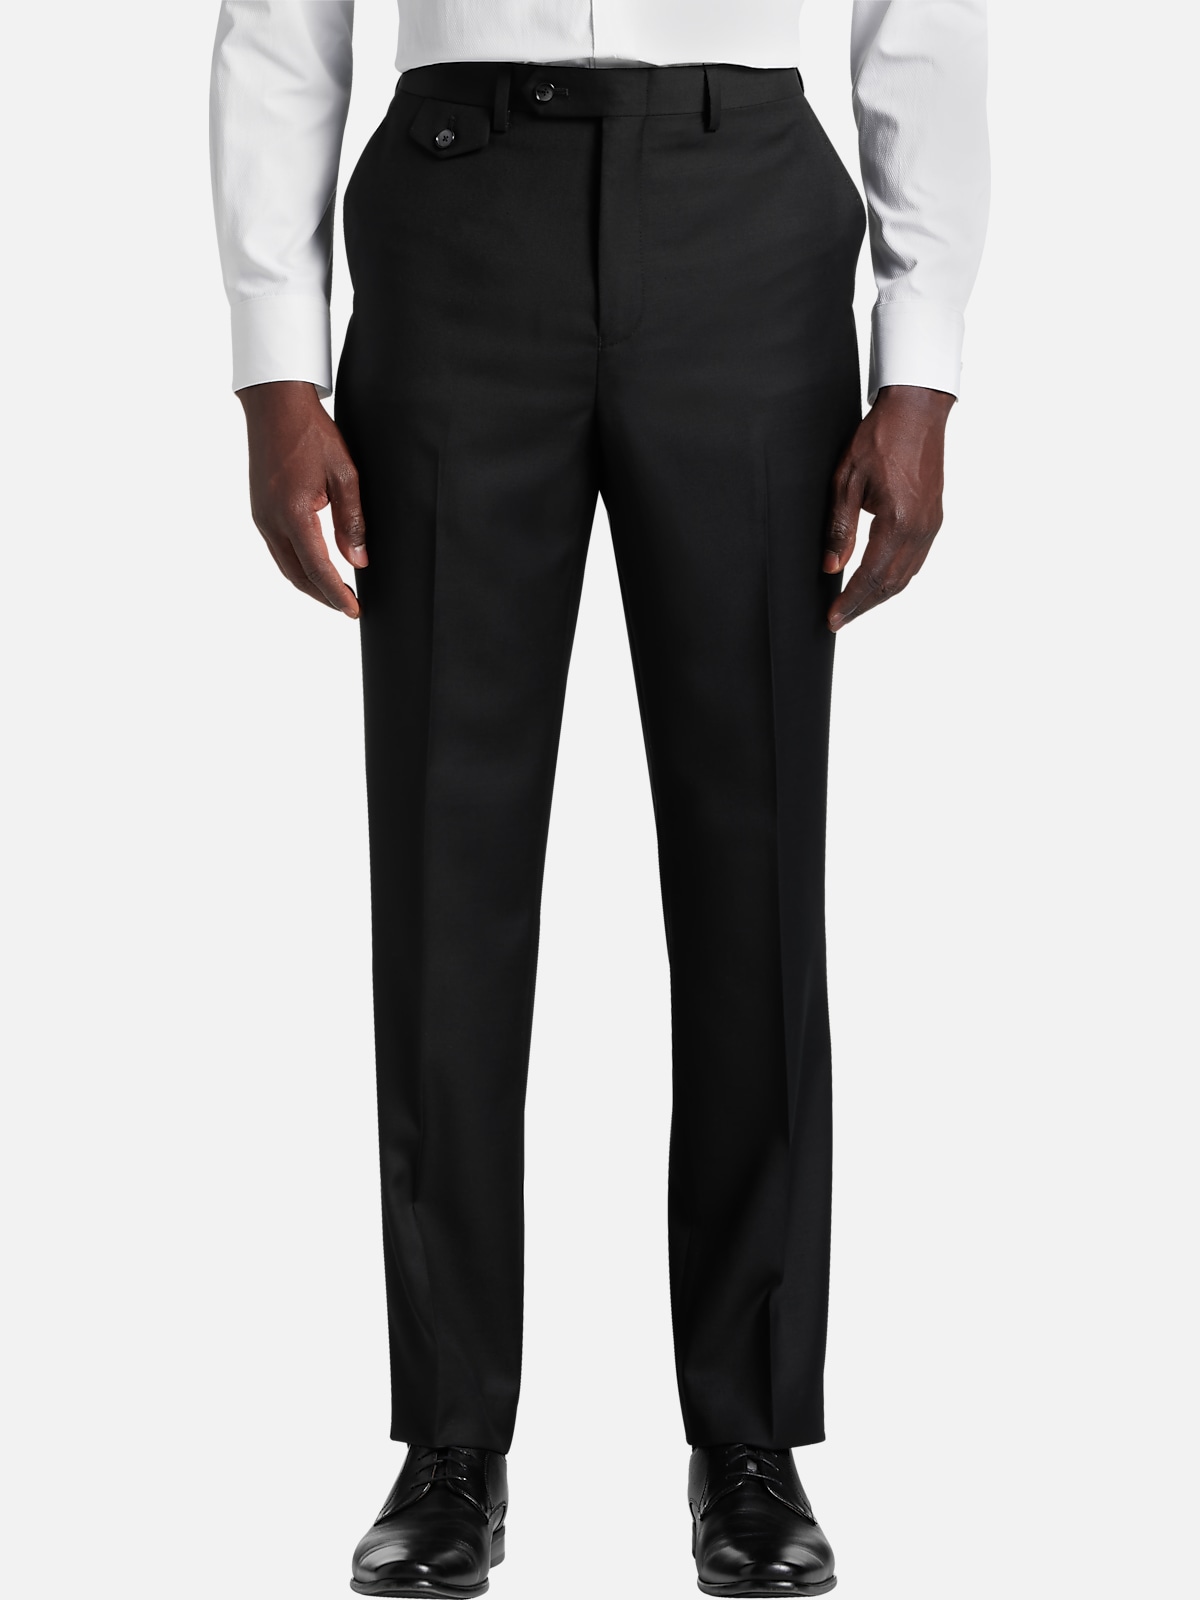 Tayion Classic Fit Suit Separate Pants | Pants| Men's Wearhouse